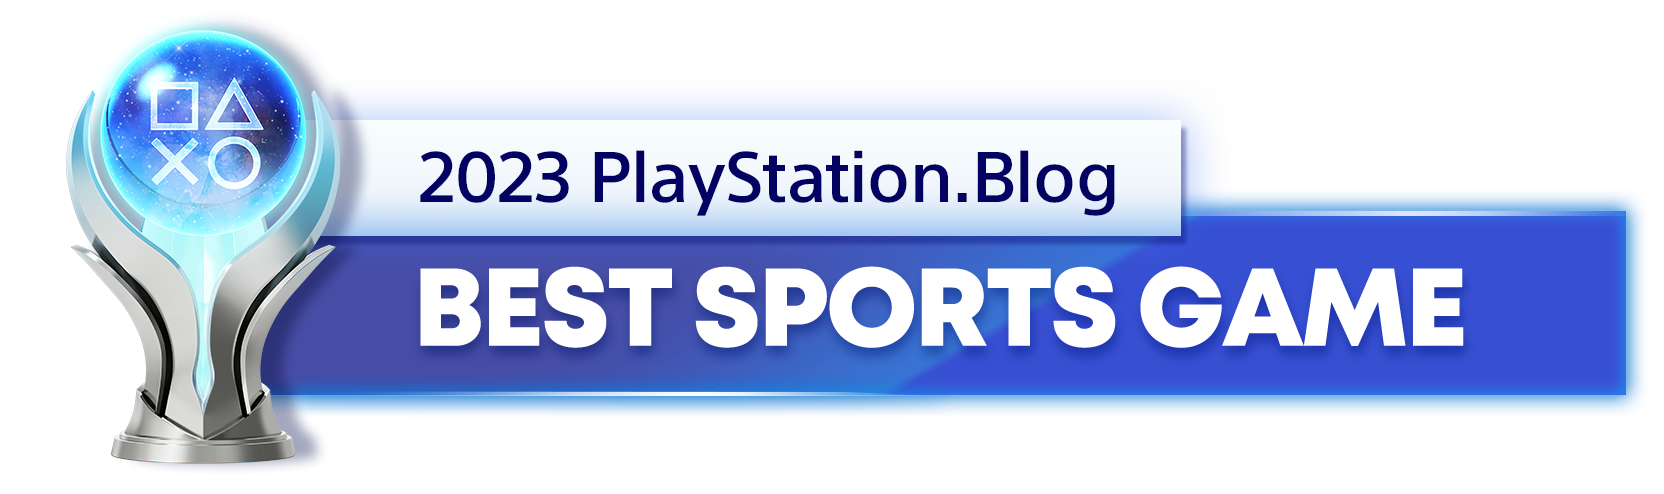  "Platinum Trophy for the 2023 PlayStation Blog Best Sports Game Winner"